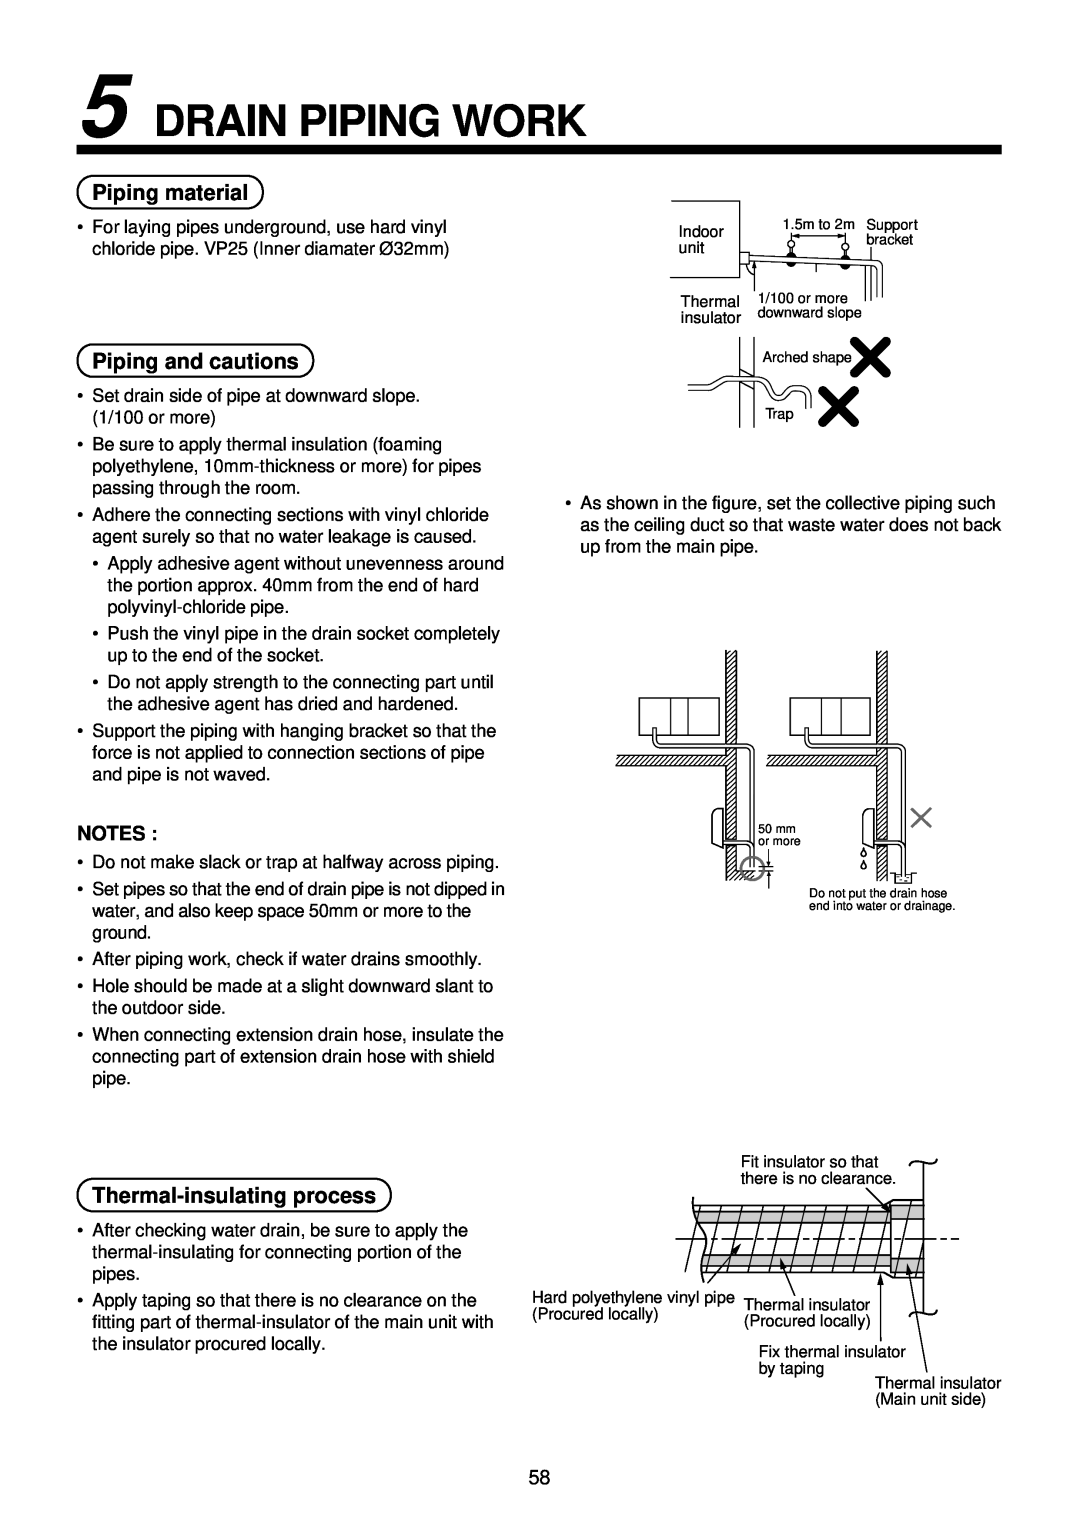 Toshiba R410A service manual Drain Piping Work, Piping material, Piping and cautions, Thermal-insulatingprocess, Notes 